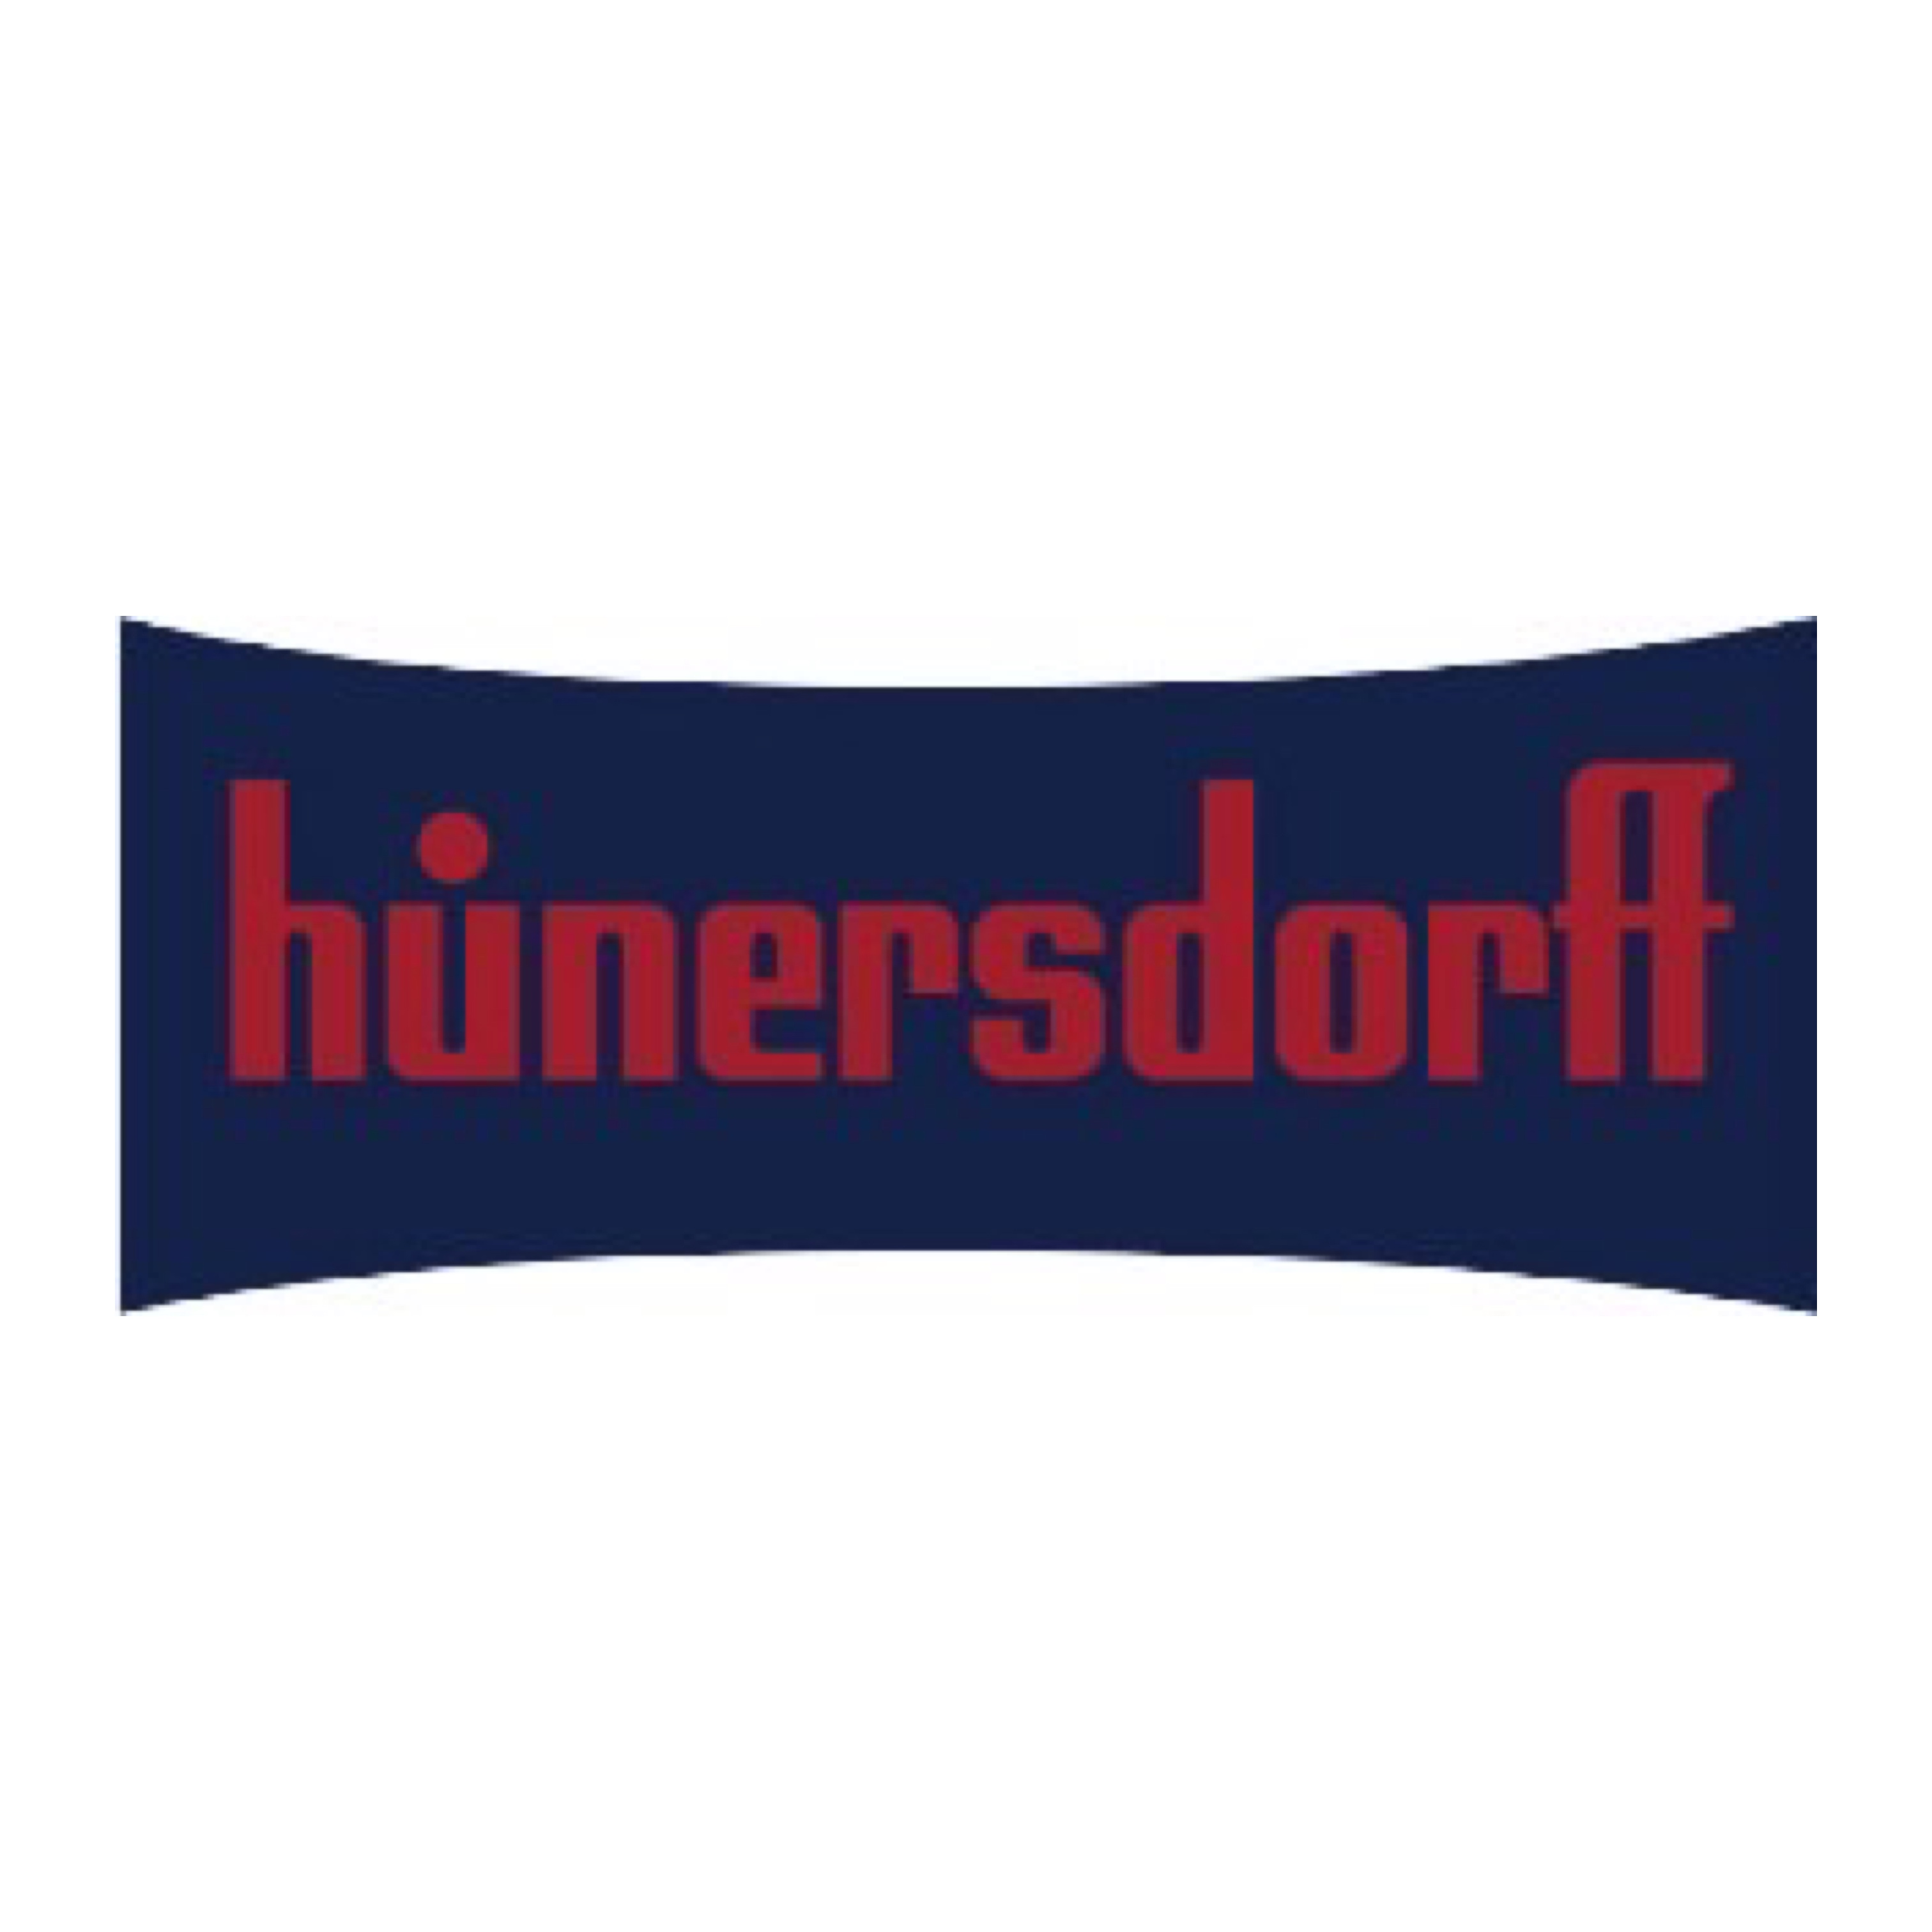 hunersdorff